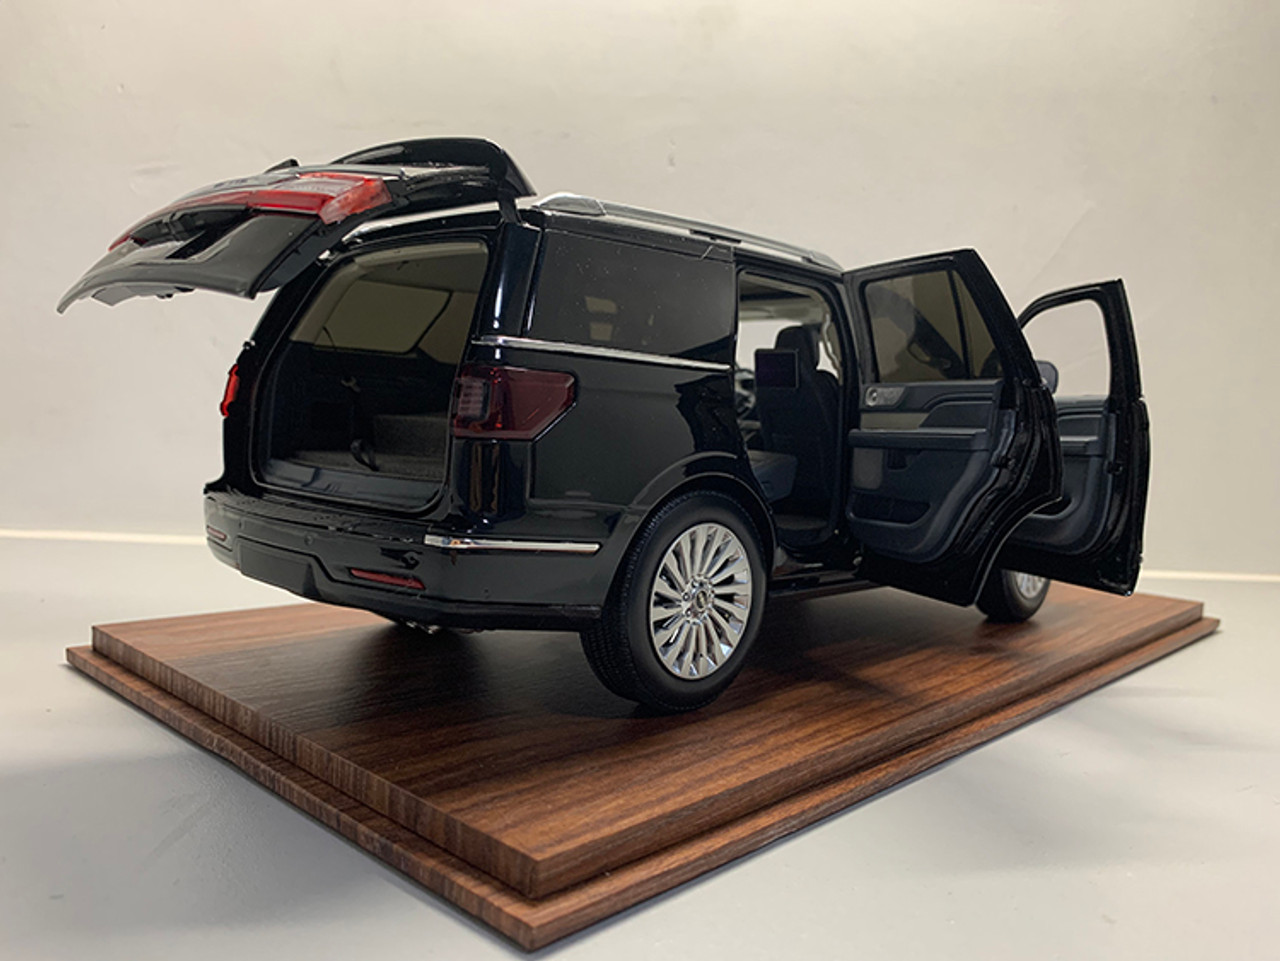 1/18 Dealer Edition Lincoln Navigator (Black) Diecast Car Model